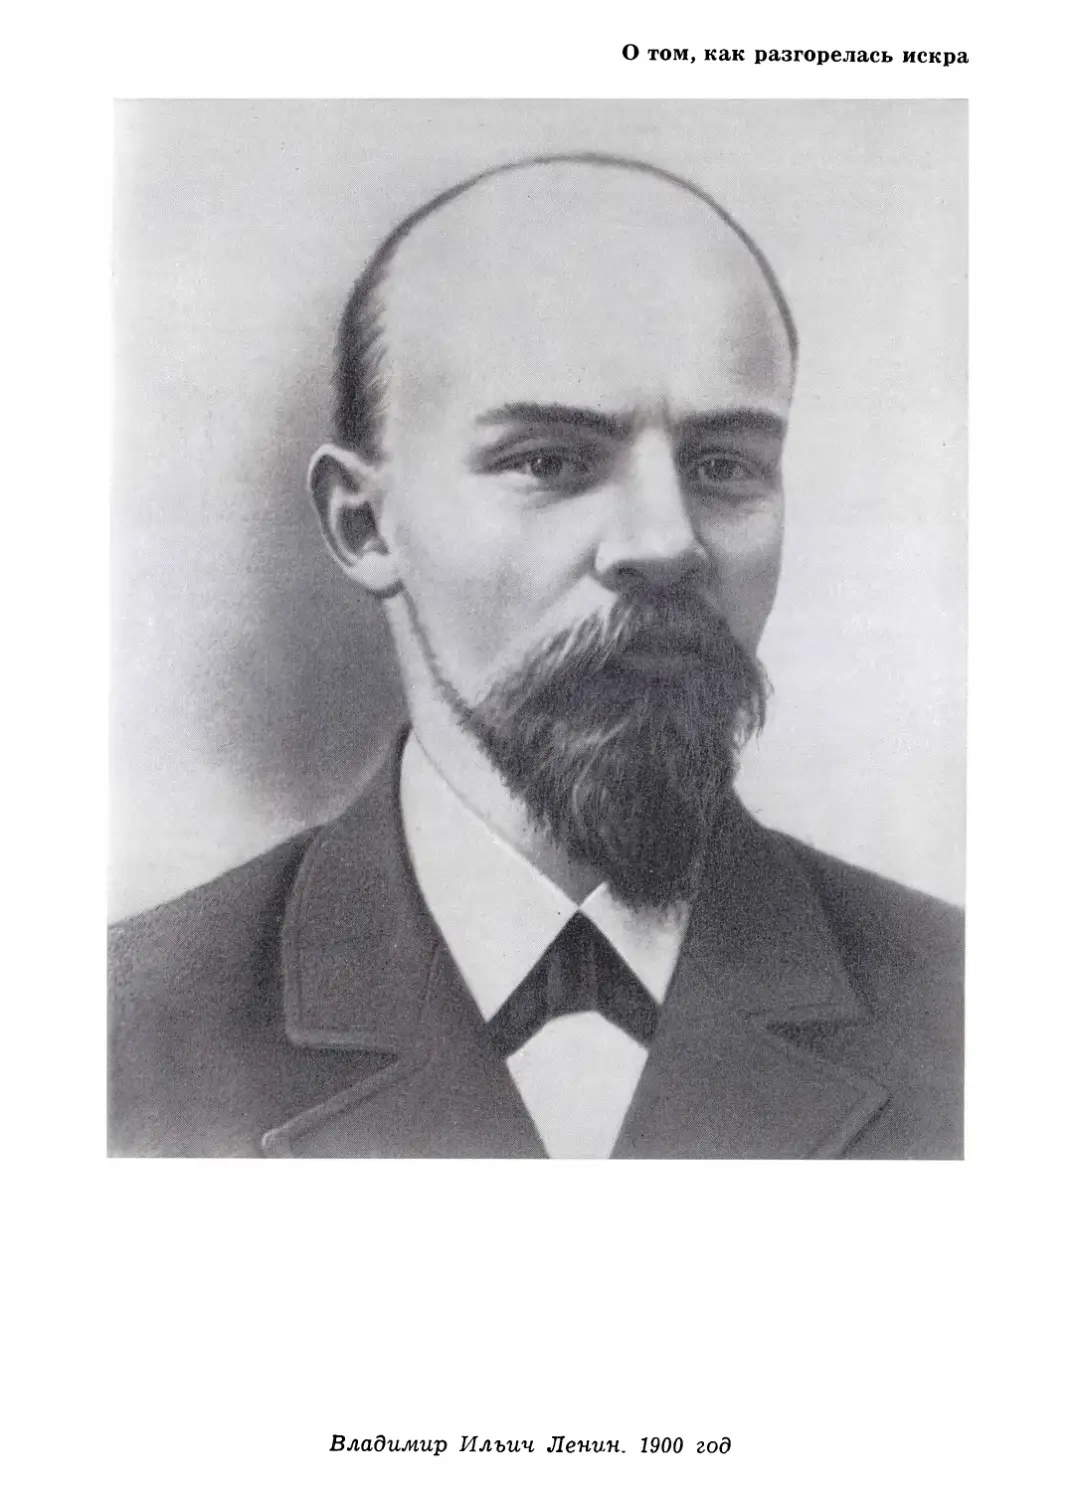 Фото: В. И. Ленин в 1900 г.